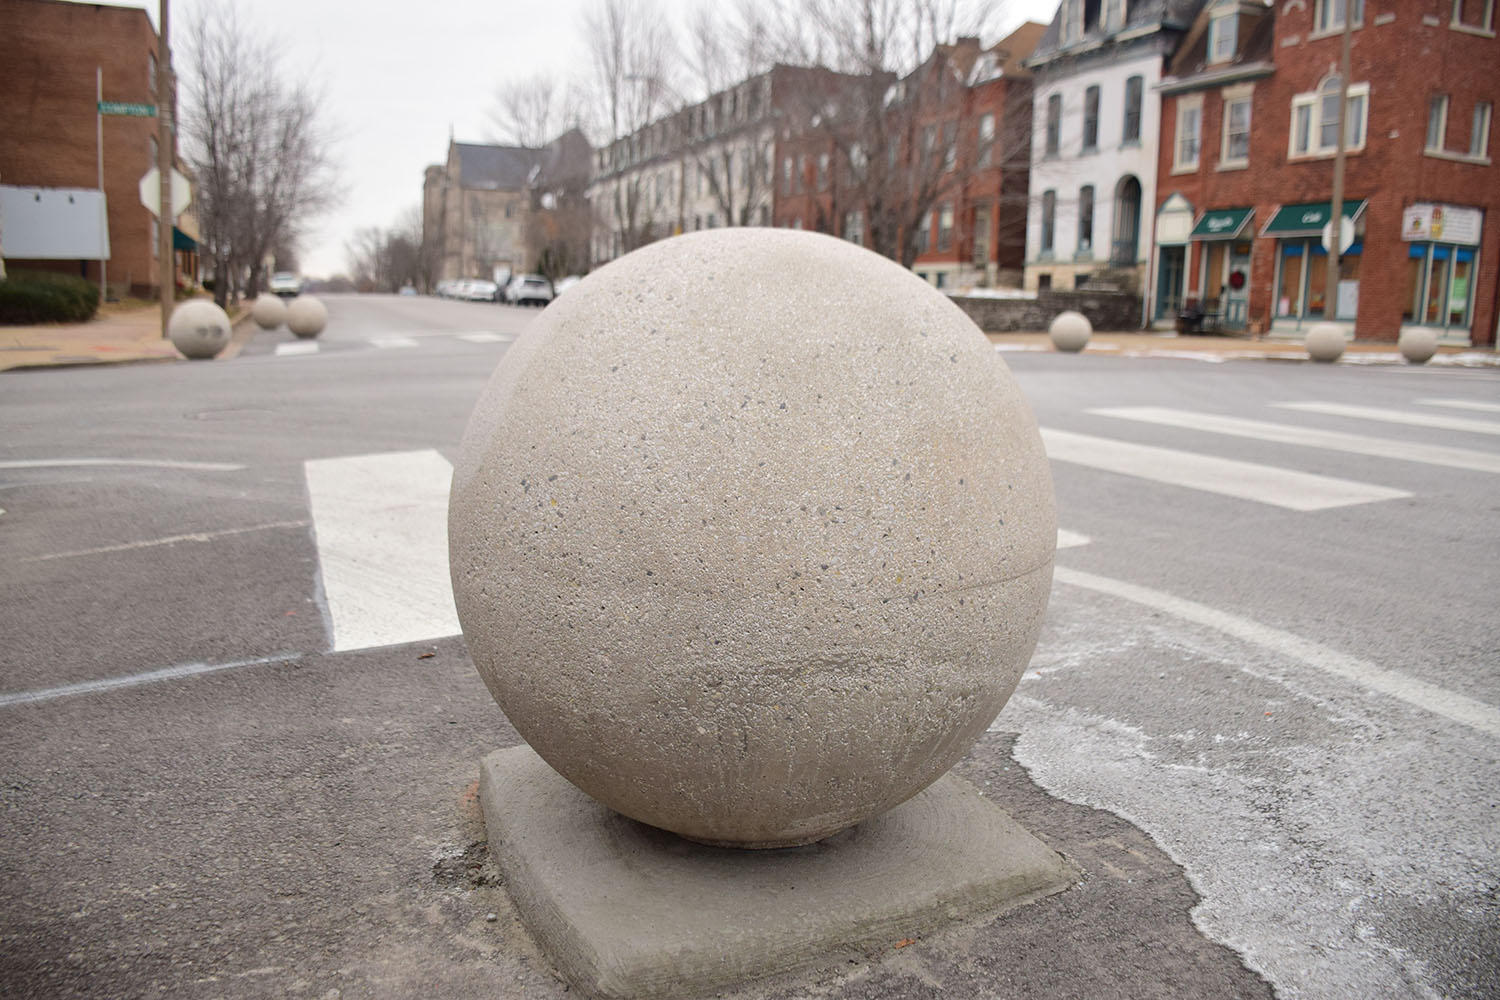 Concrete balls cause stir in south St. Louis neighborhoods | St. Louis